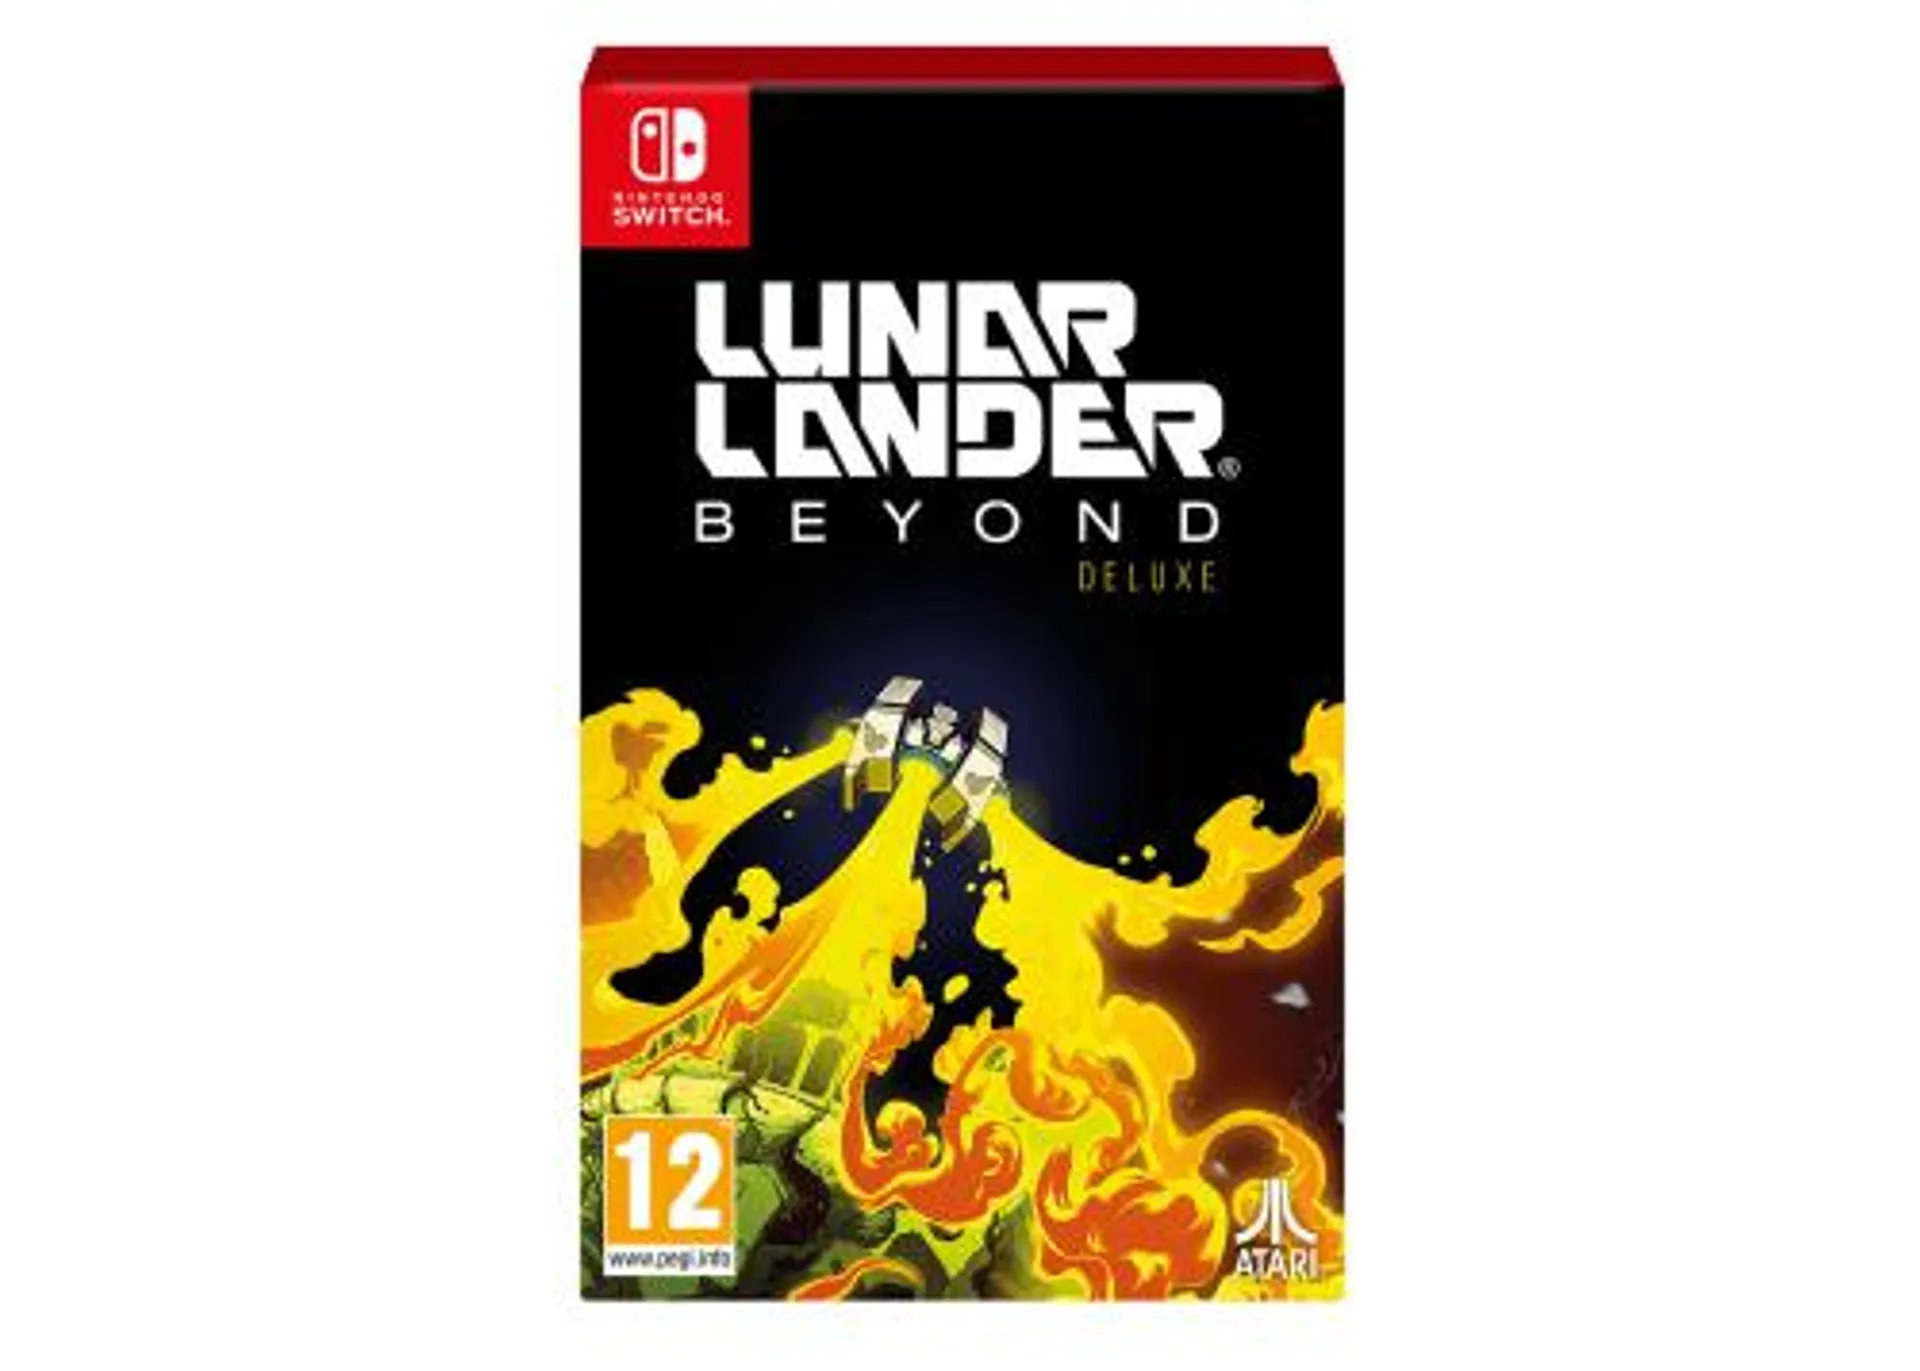 Lunar Lander Beyond Deluxe (Switch)